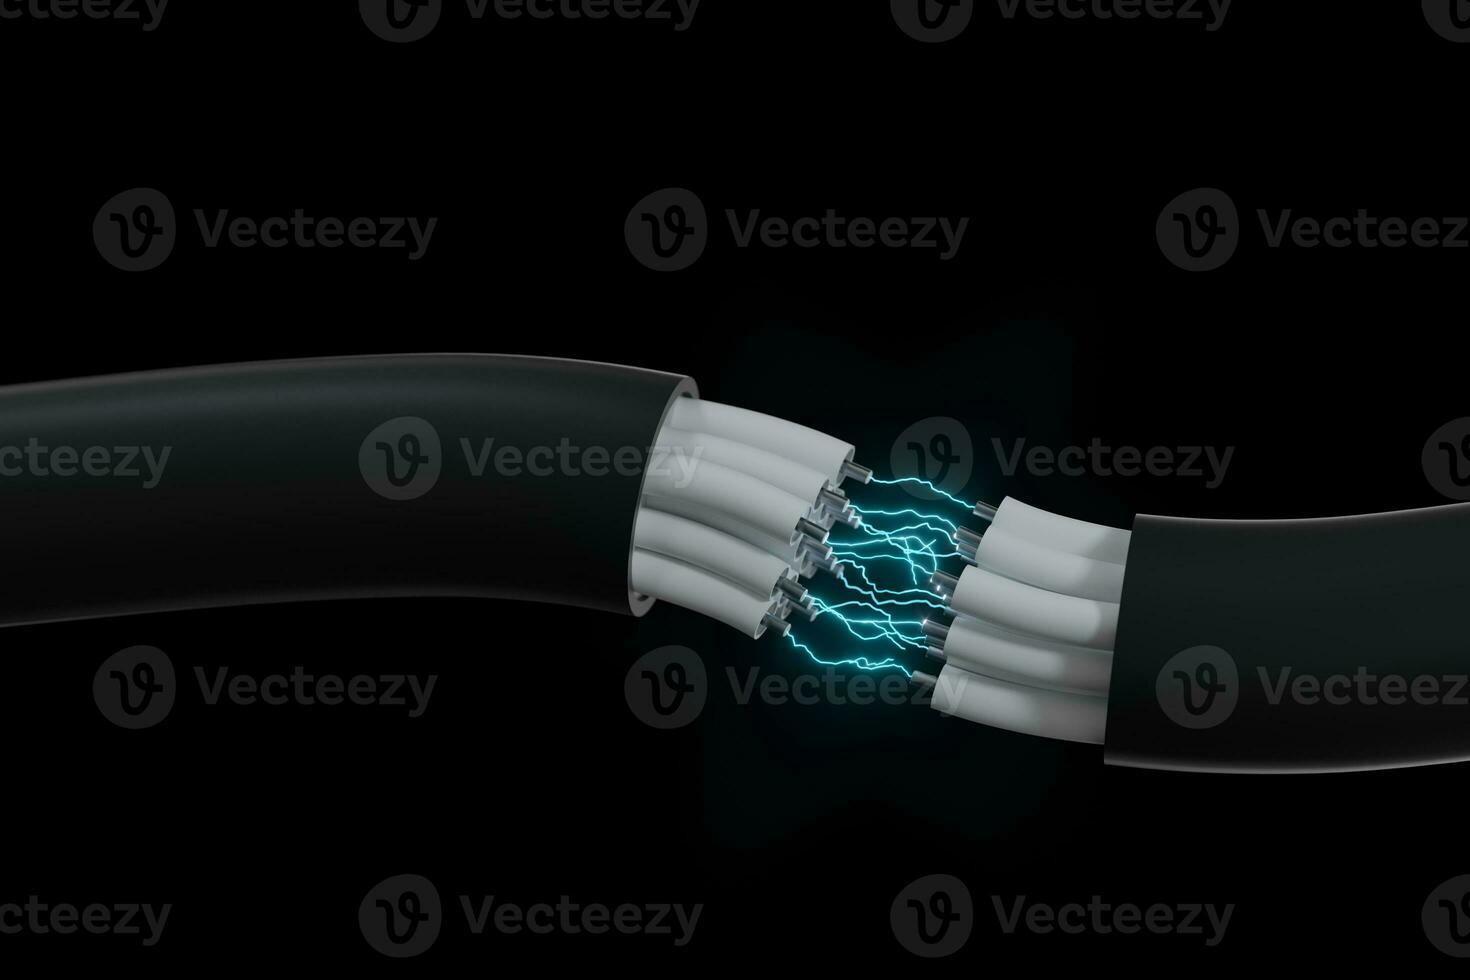 kabel met uitgebreid kern, elektronisch verbinding Product, met bliksem effect 3d weergave. foto